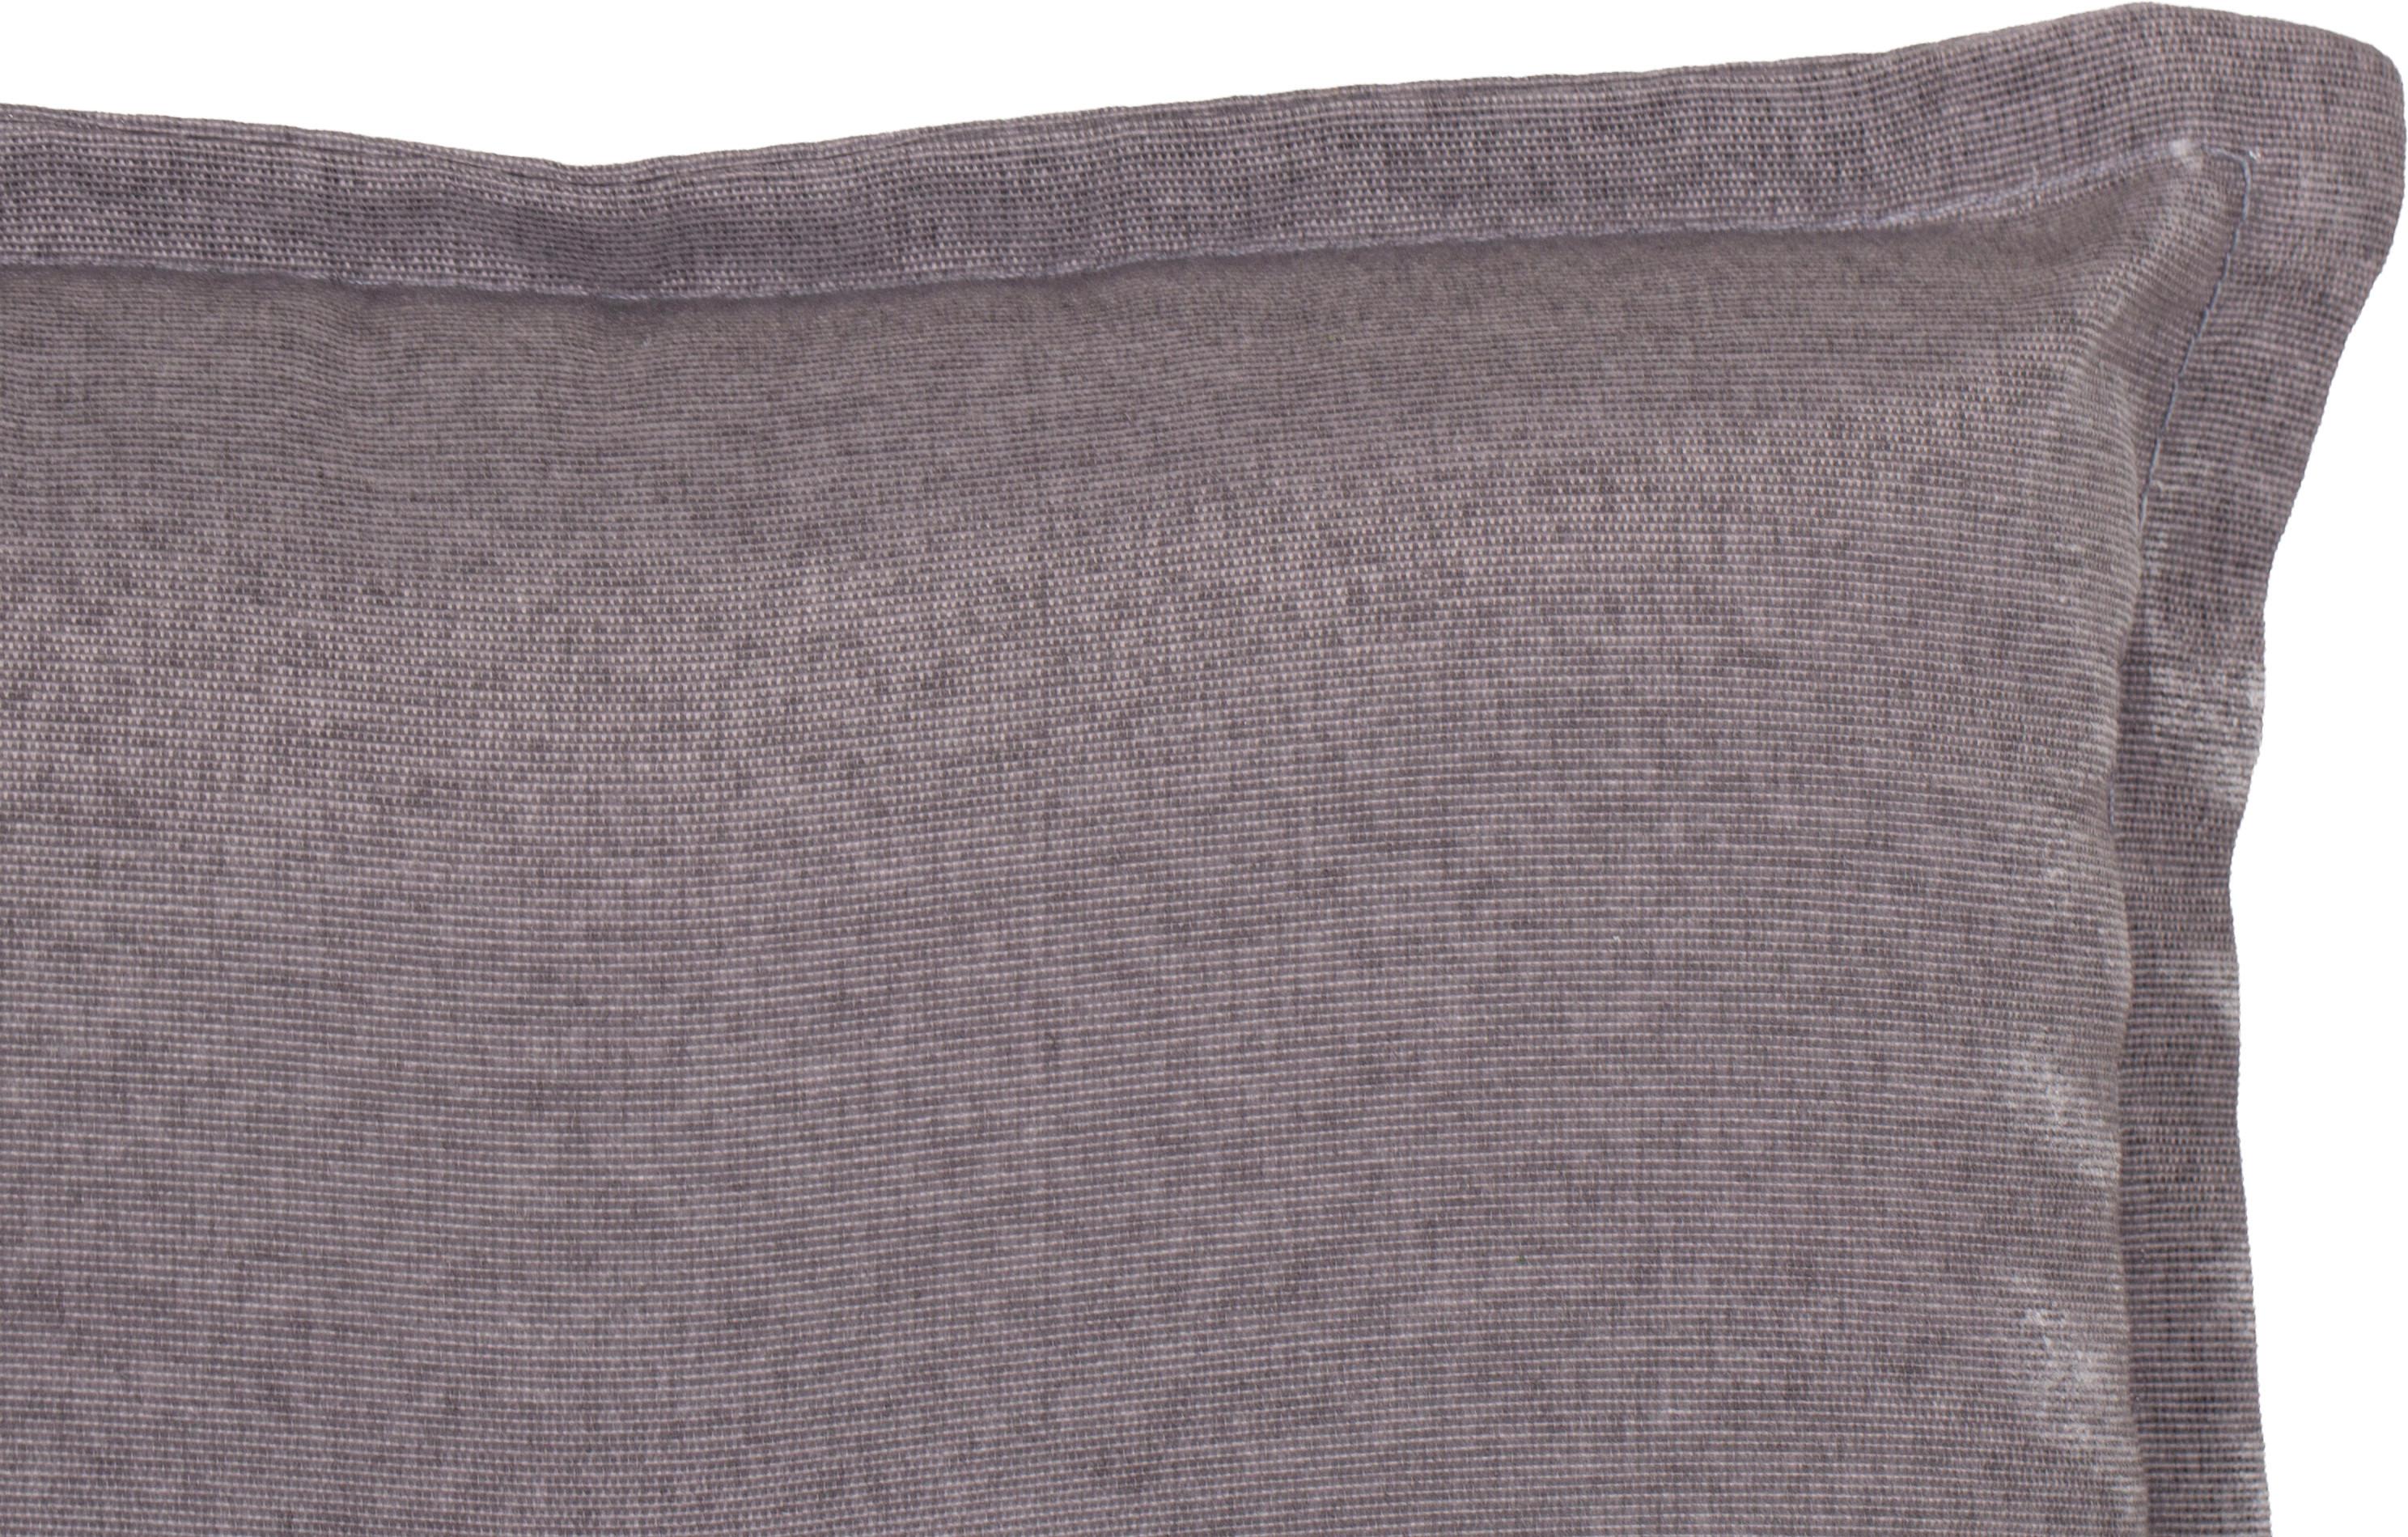 Sesselauflage Turin in Grau - Hellgrau/Grau, MODERN, Textil (118/46/8cm) - Modern Living